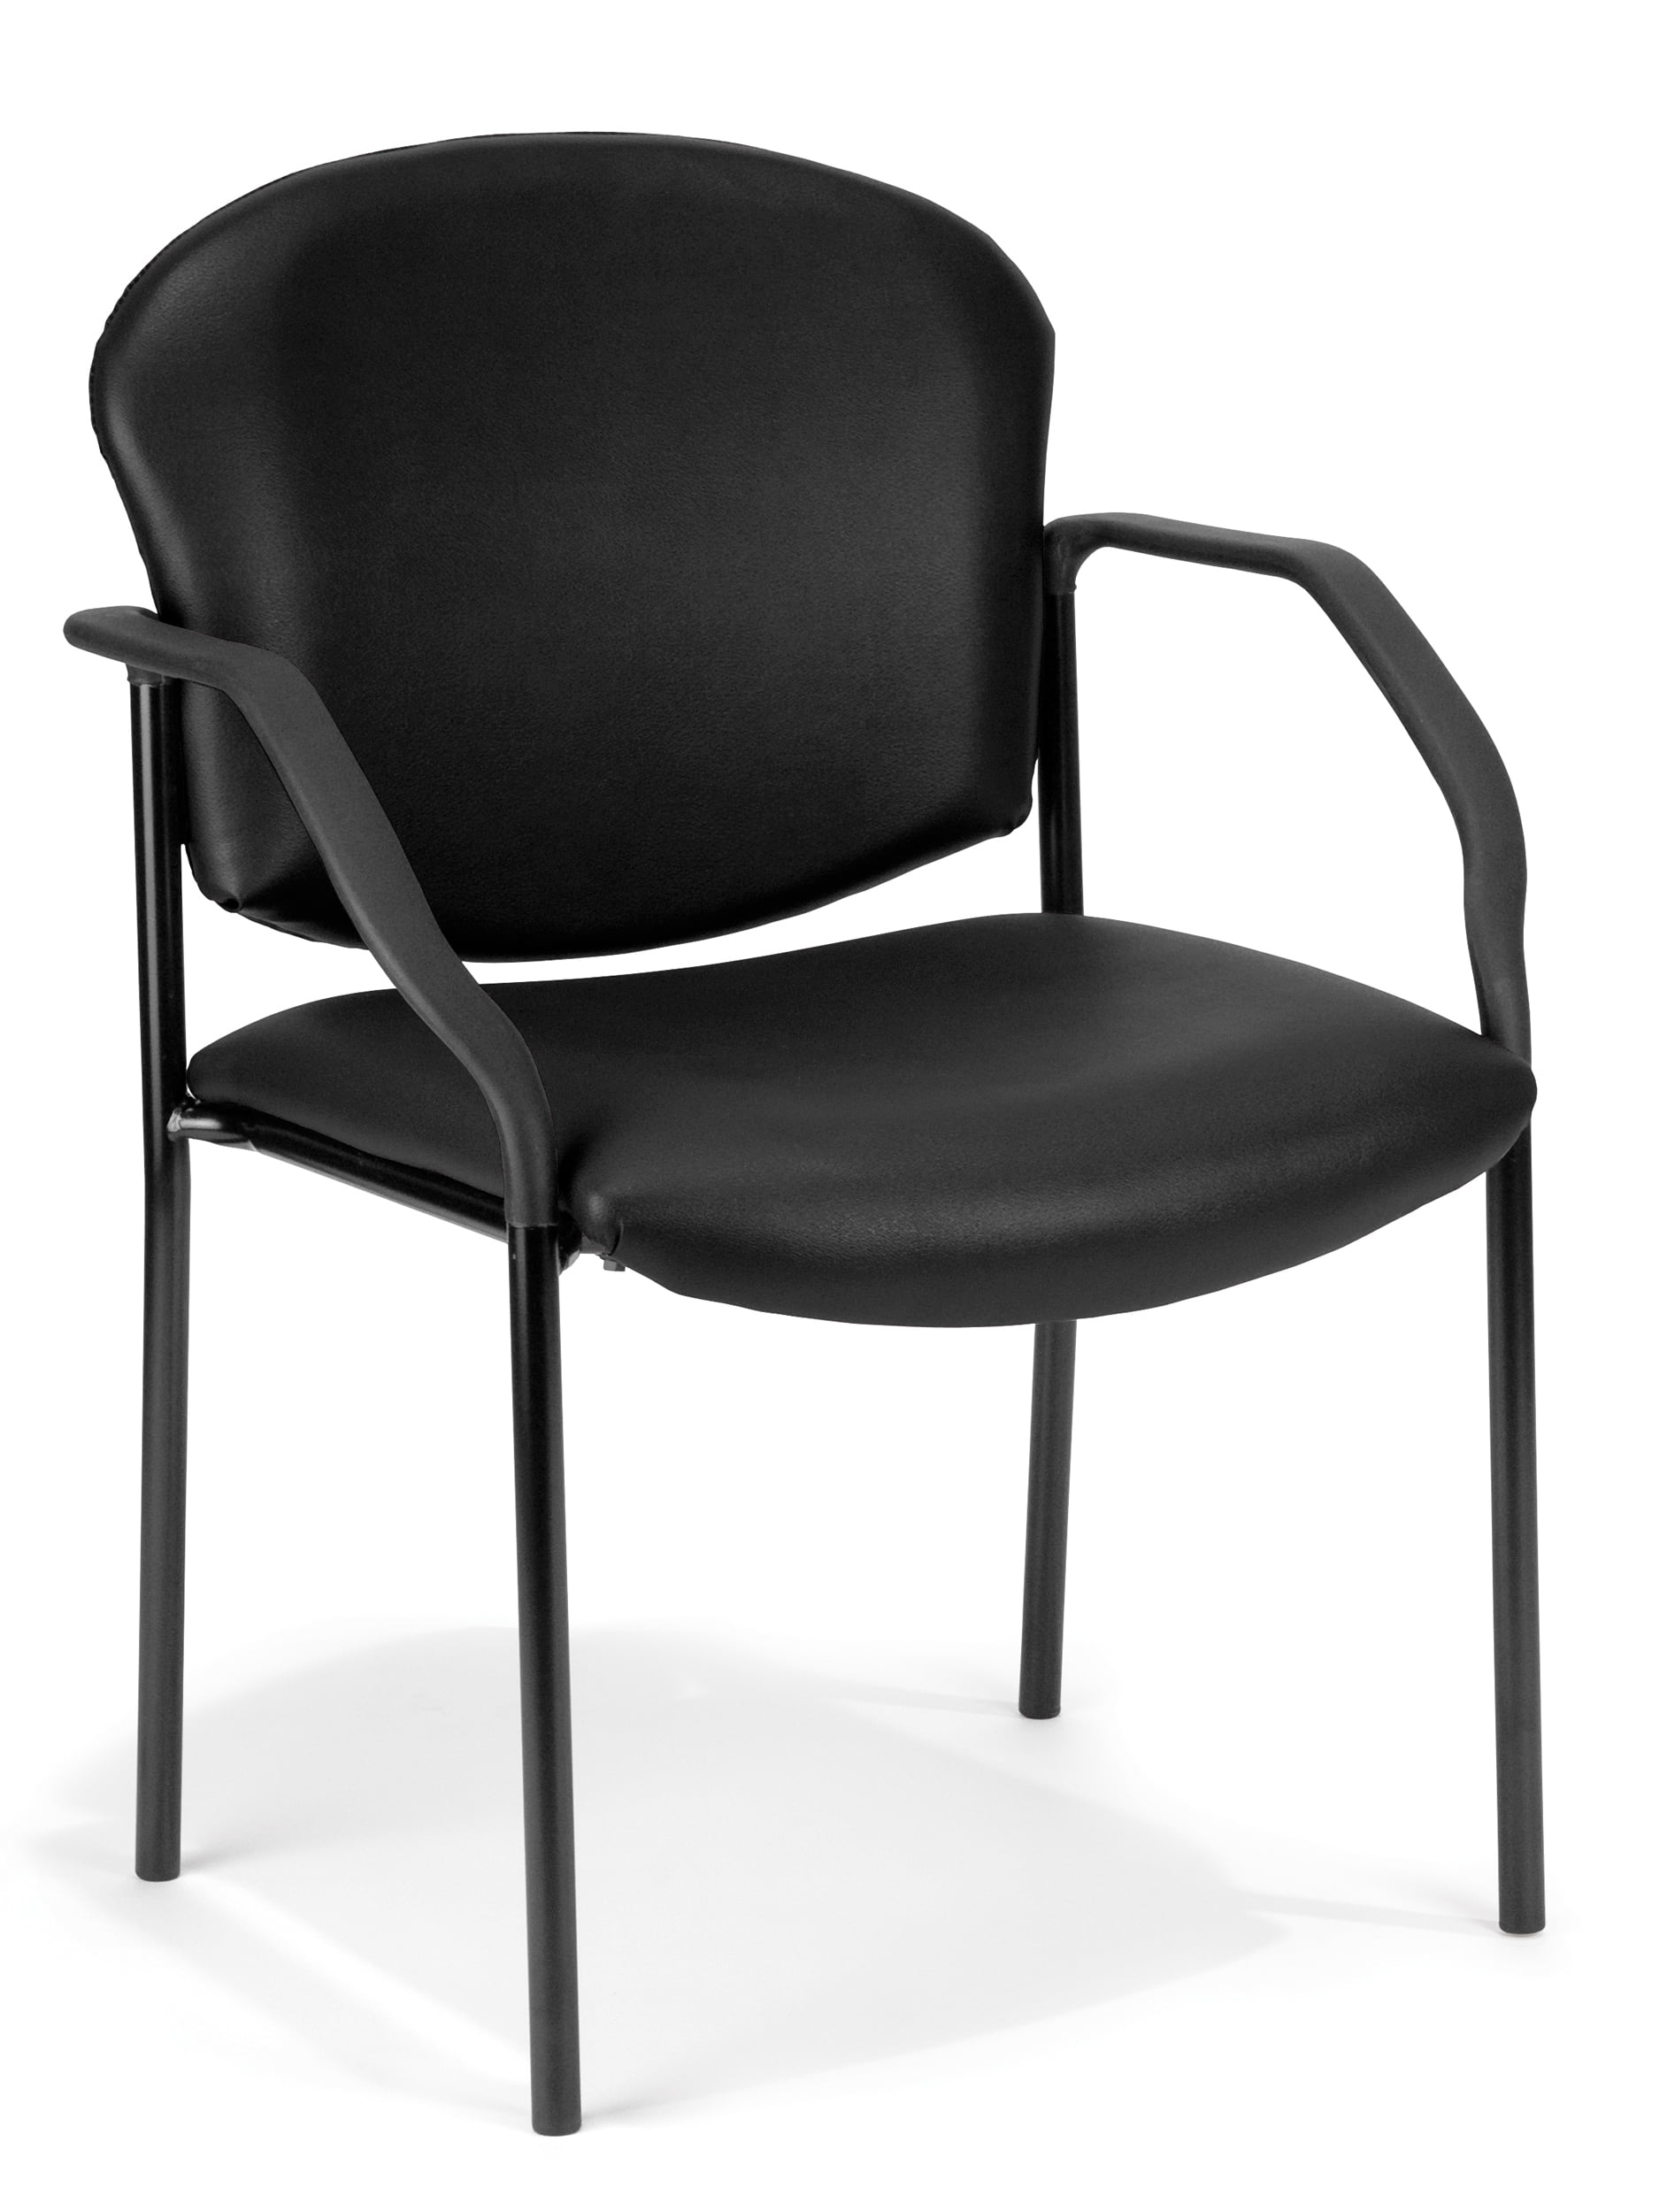 Ofminc Manor Series Office Furniture 250 lbs Capacity Black Vinyl Steel